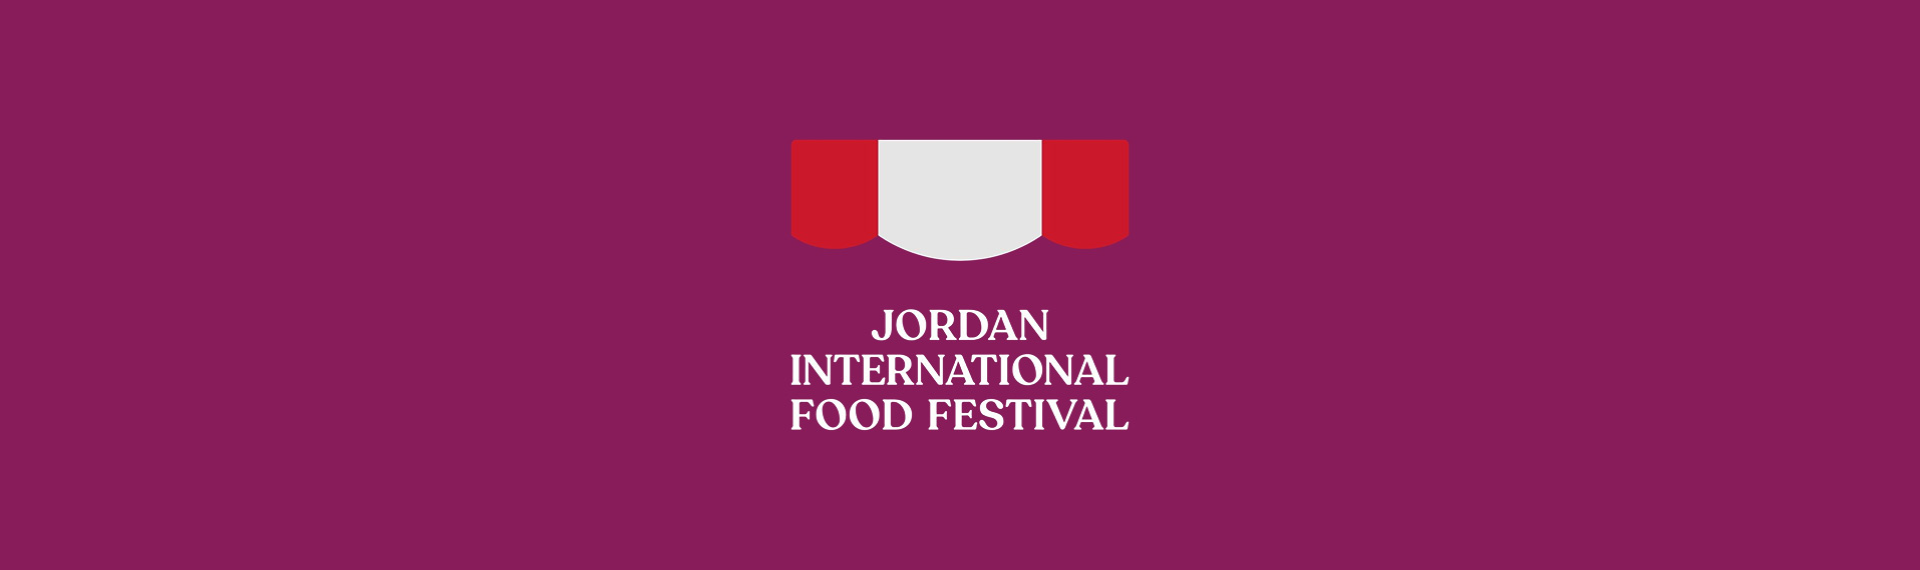 Jordan International Food Festival